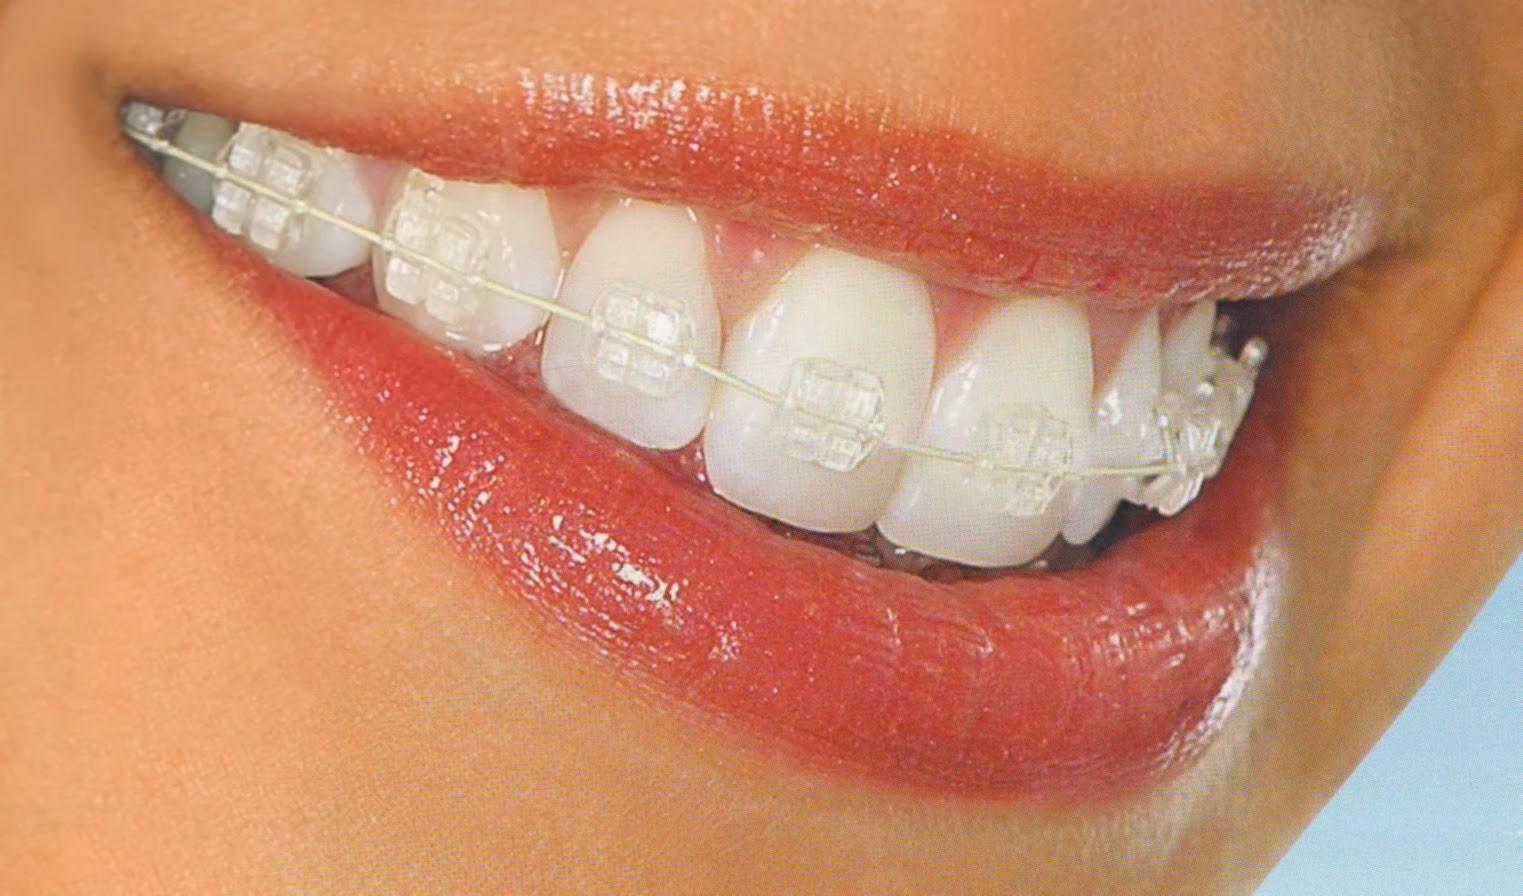 Ceramic braces are also called Invisible braces